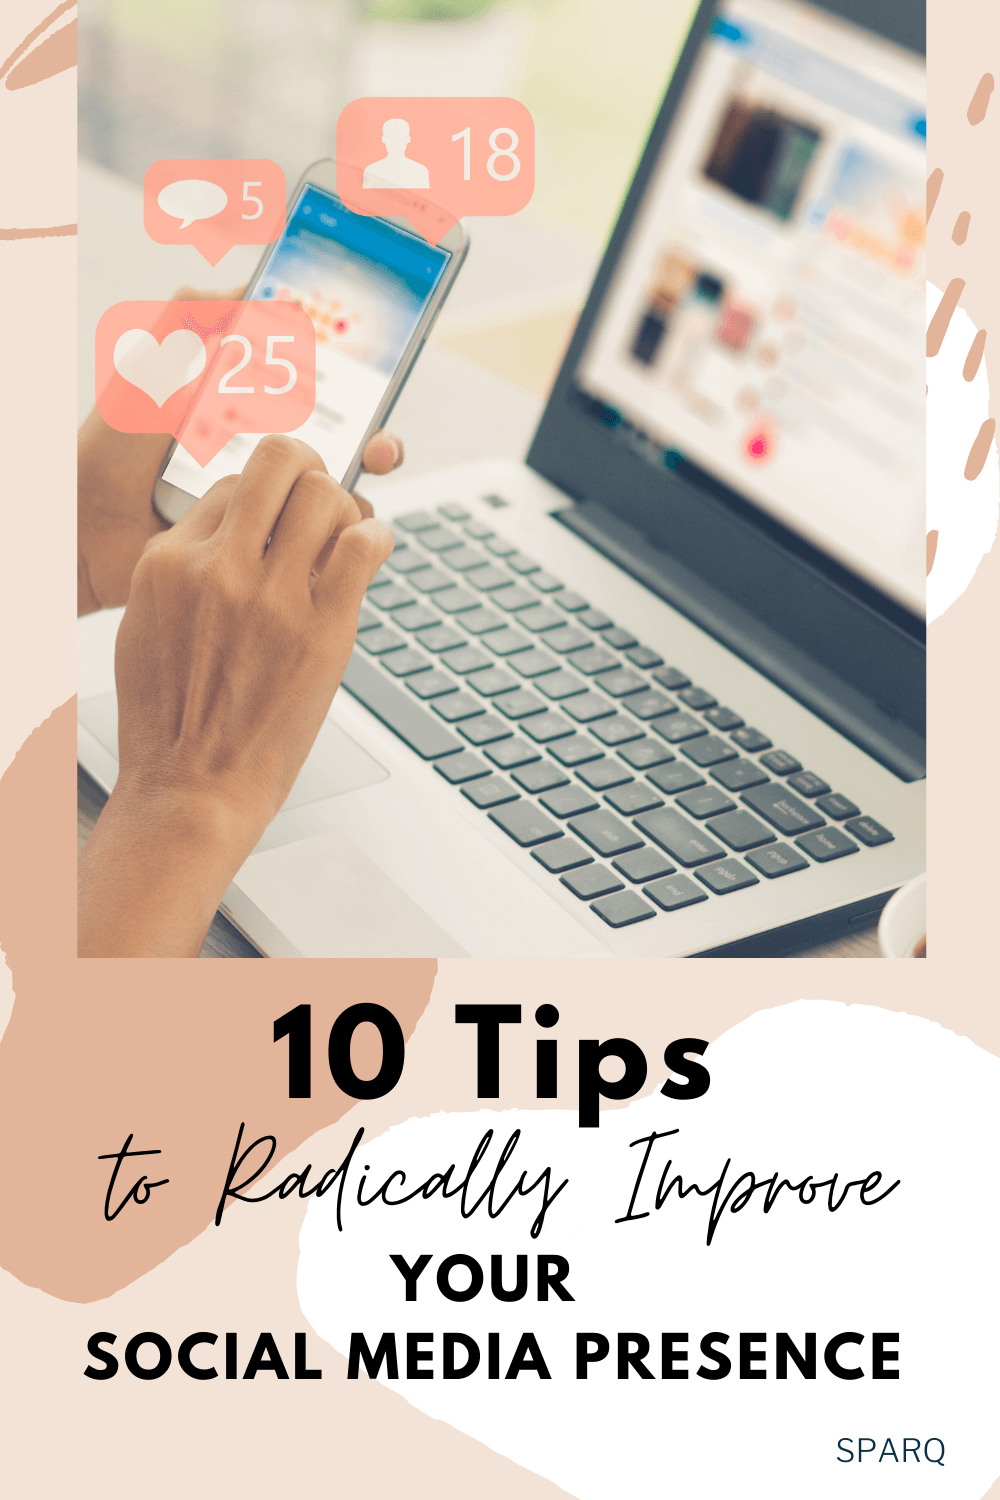 10 Tips to Radically Improve Your Social Media Presence